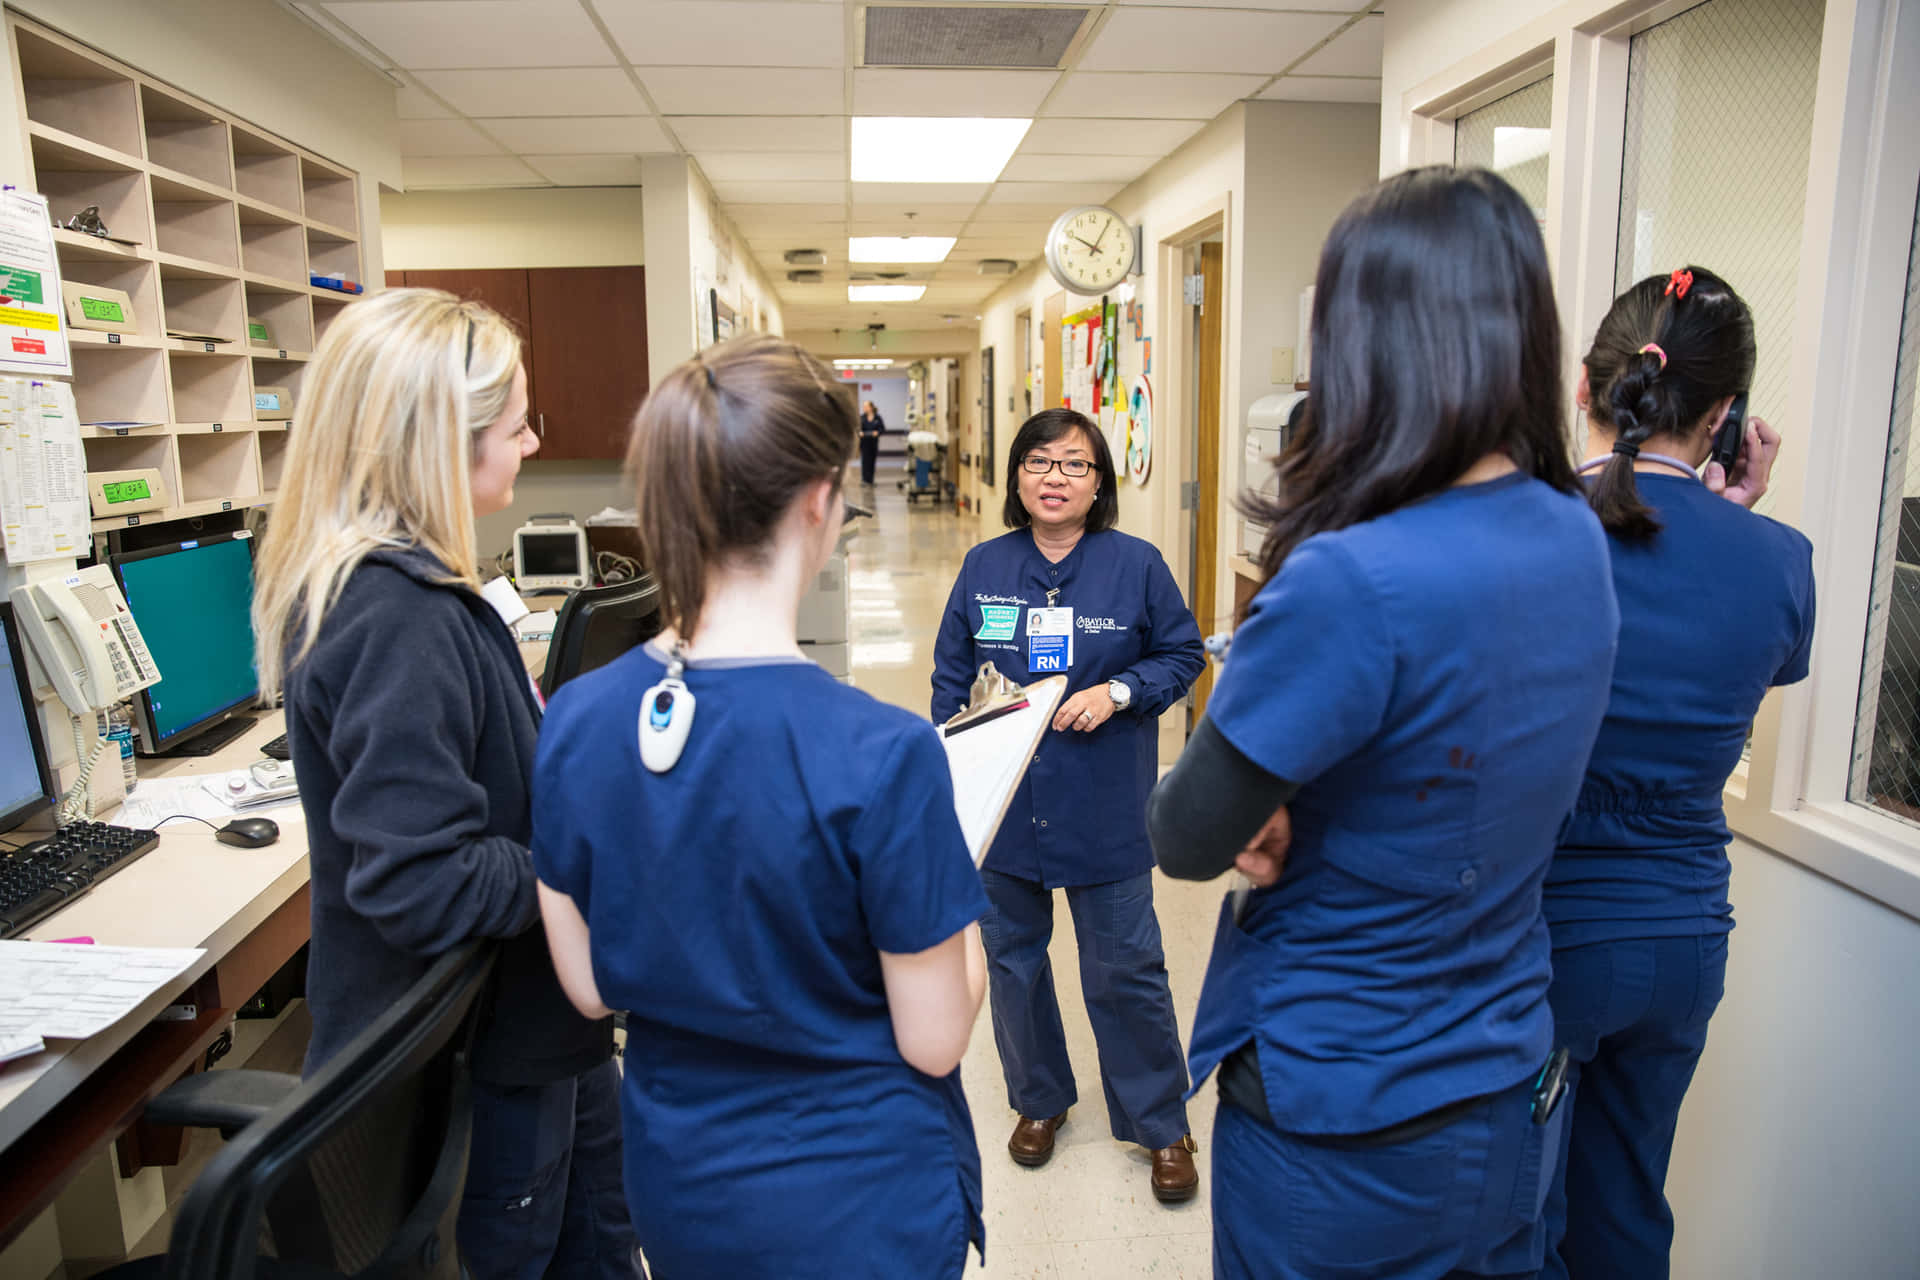 A Group Of Nurses Talking In A Hallway